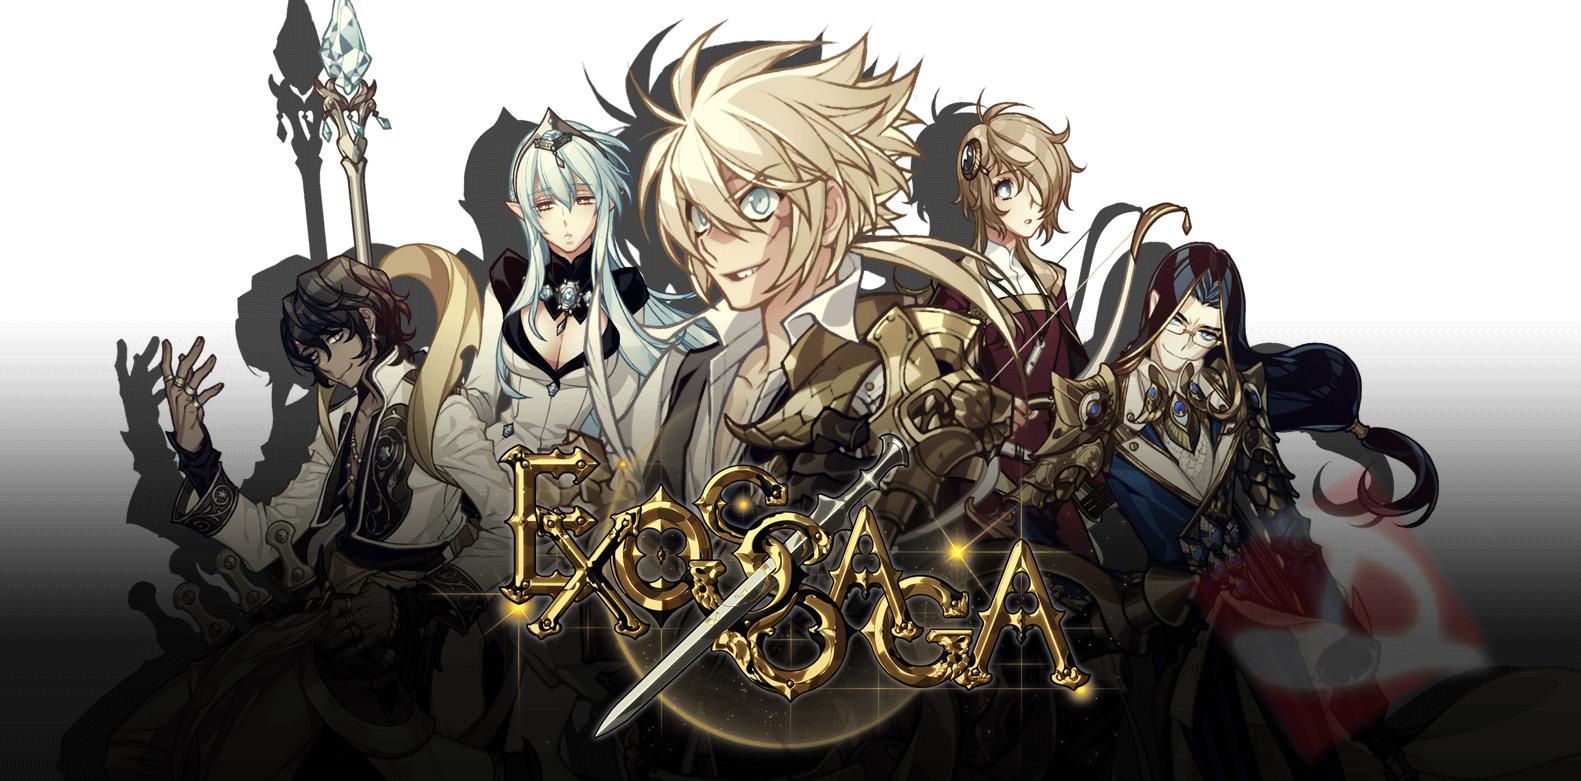 Exos Saga เกม Fantasy RPG ภาพสวยจากเกาหลี เปิดลงทะเบียนล่วงหน้า 120 ประเทศทั่วโลก